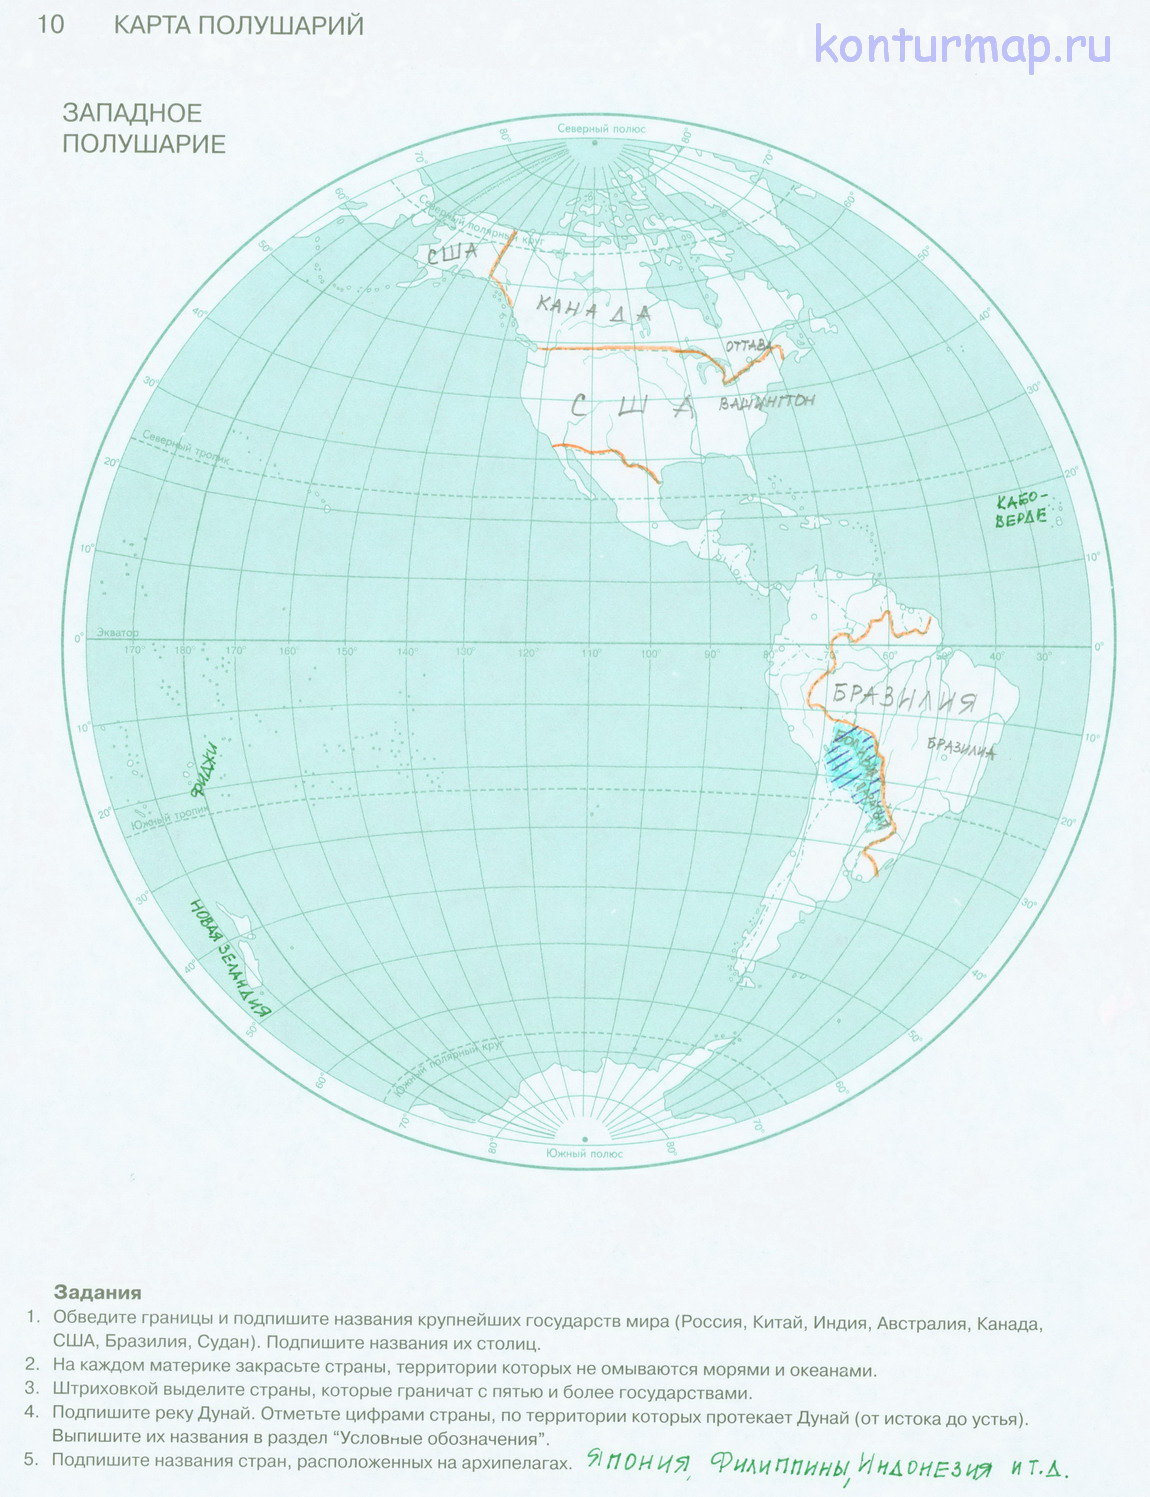 Фото Карты Мира С Названиями Стран